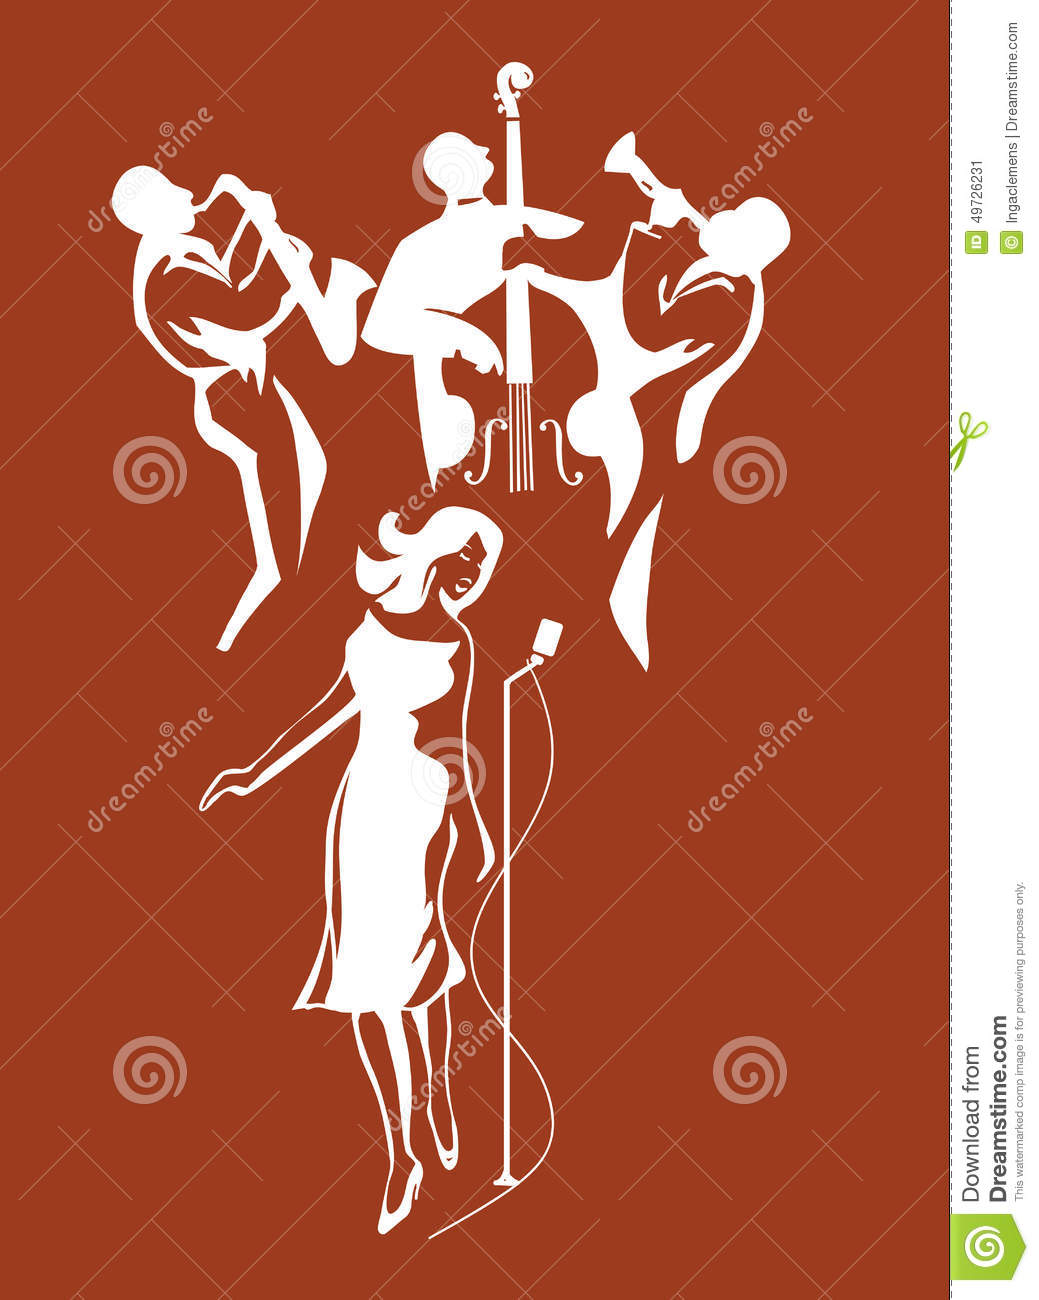 Female Jazz Singer With Jazz Band Graphics